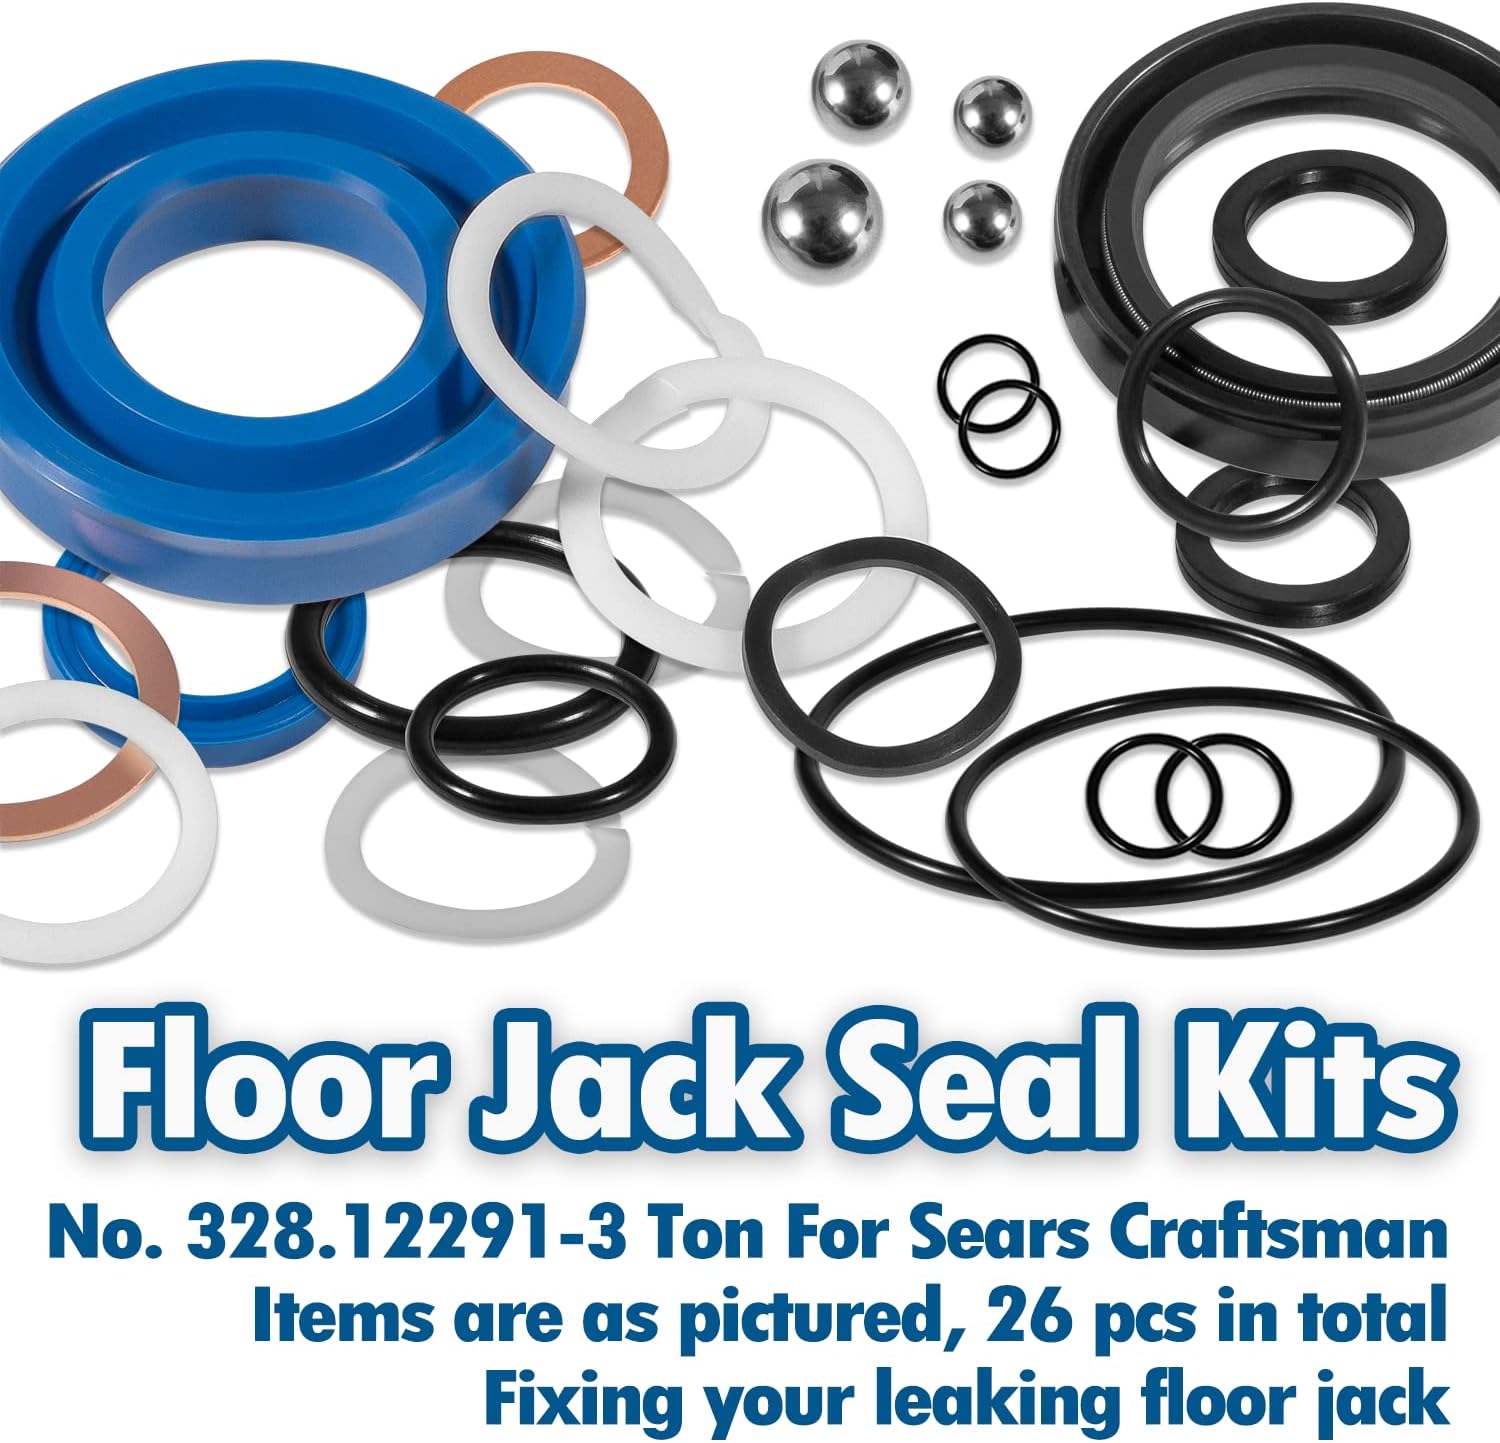 Bzumperyz Floor Jack Seal Kits No. 328.12291-3 Ton for Sears Craftsman Replacement Part (26pcs)